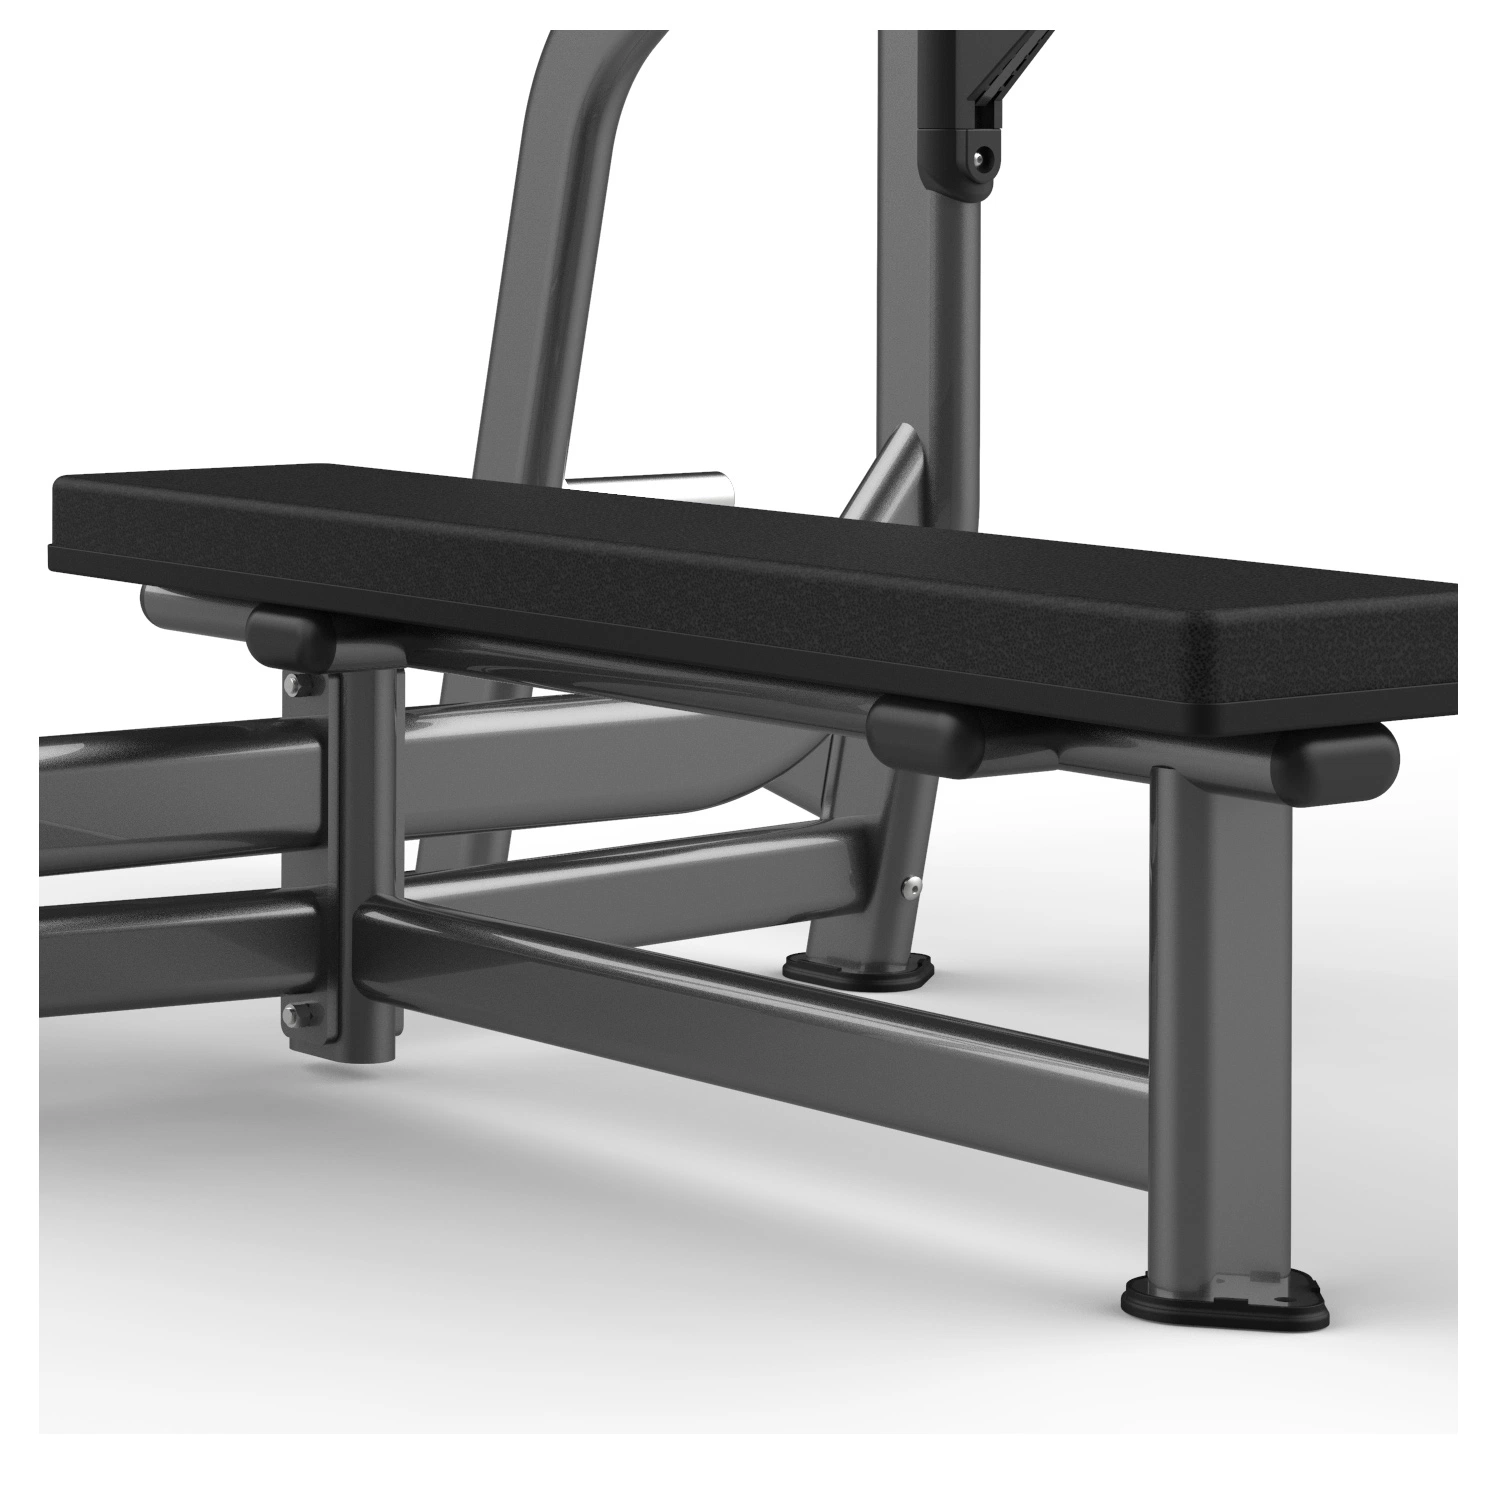 Realleader Flat Bench Press Gym Equipments